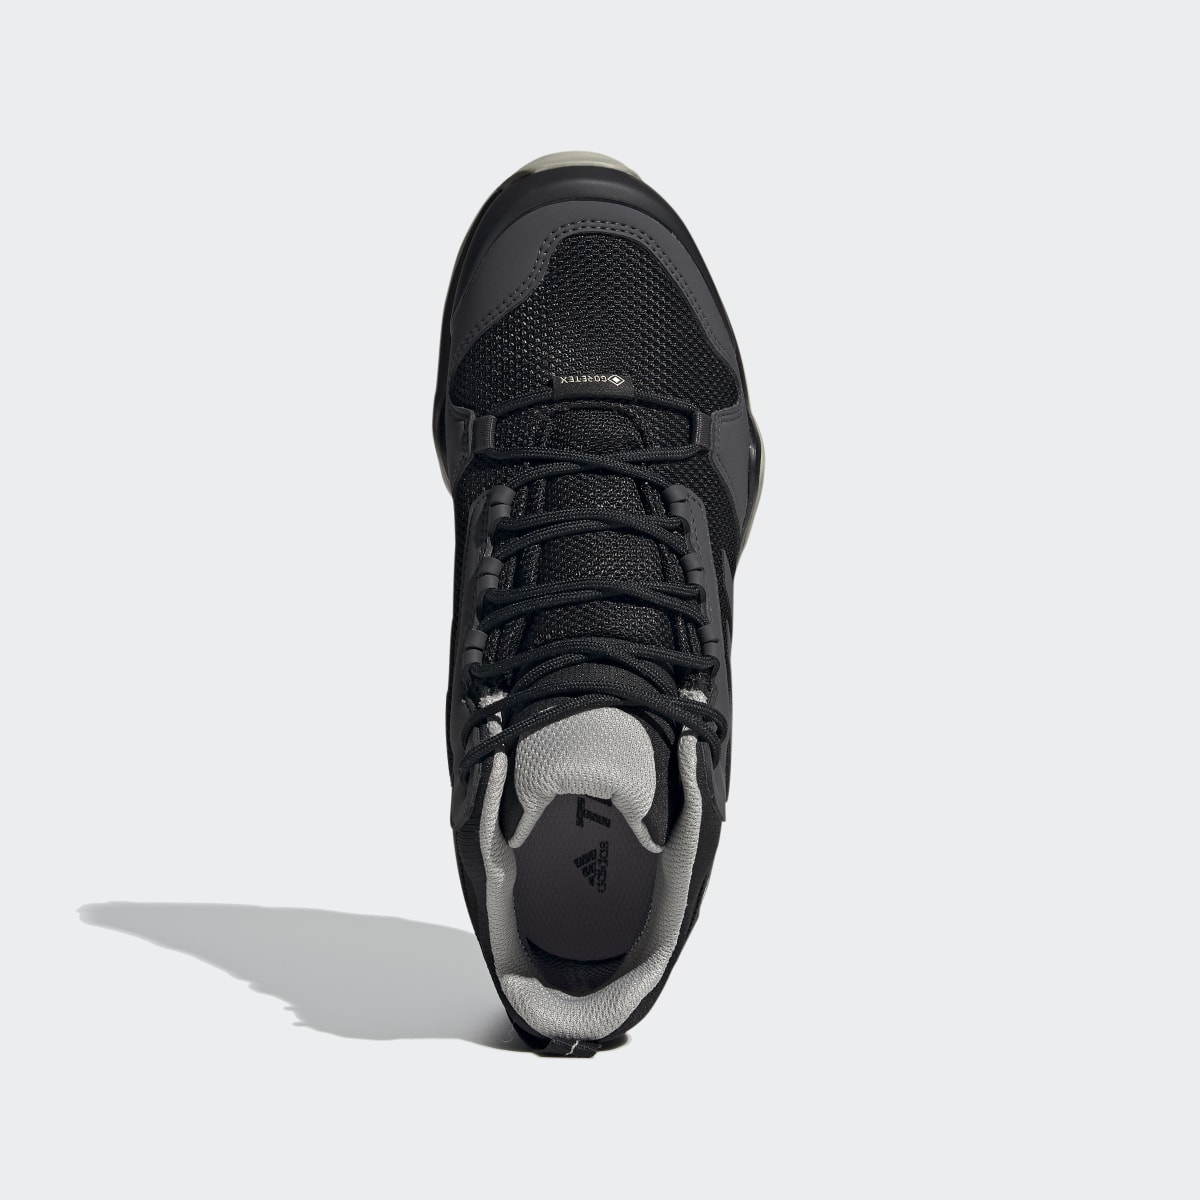 Adidas Sapatos de Caminhada AX3 Mid GORE-TEX TERREX. 8